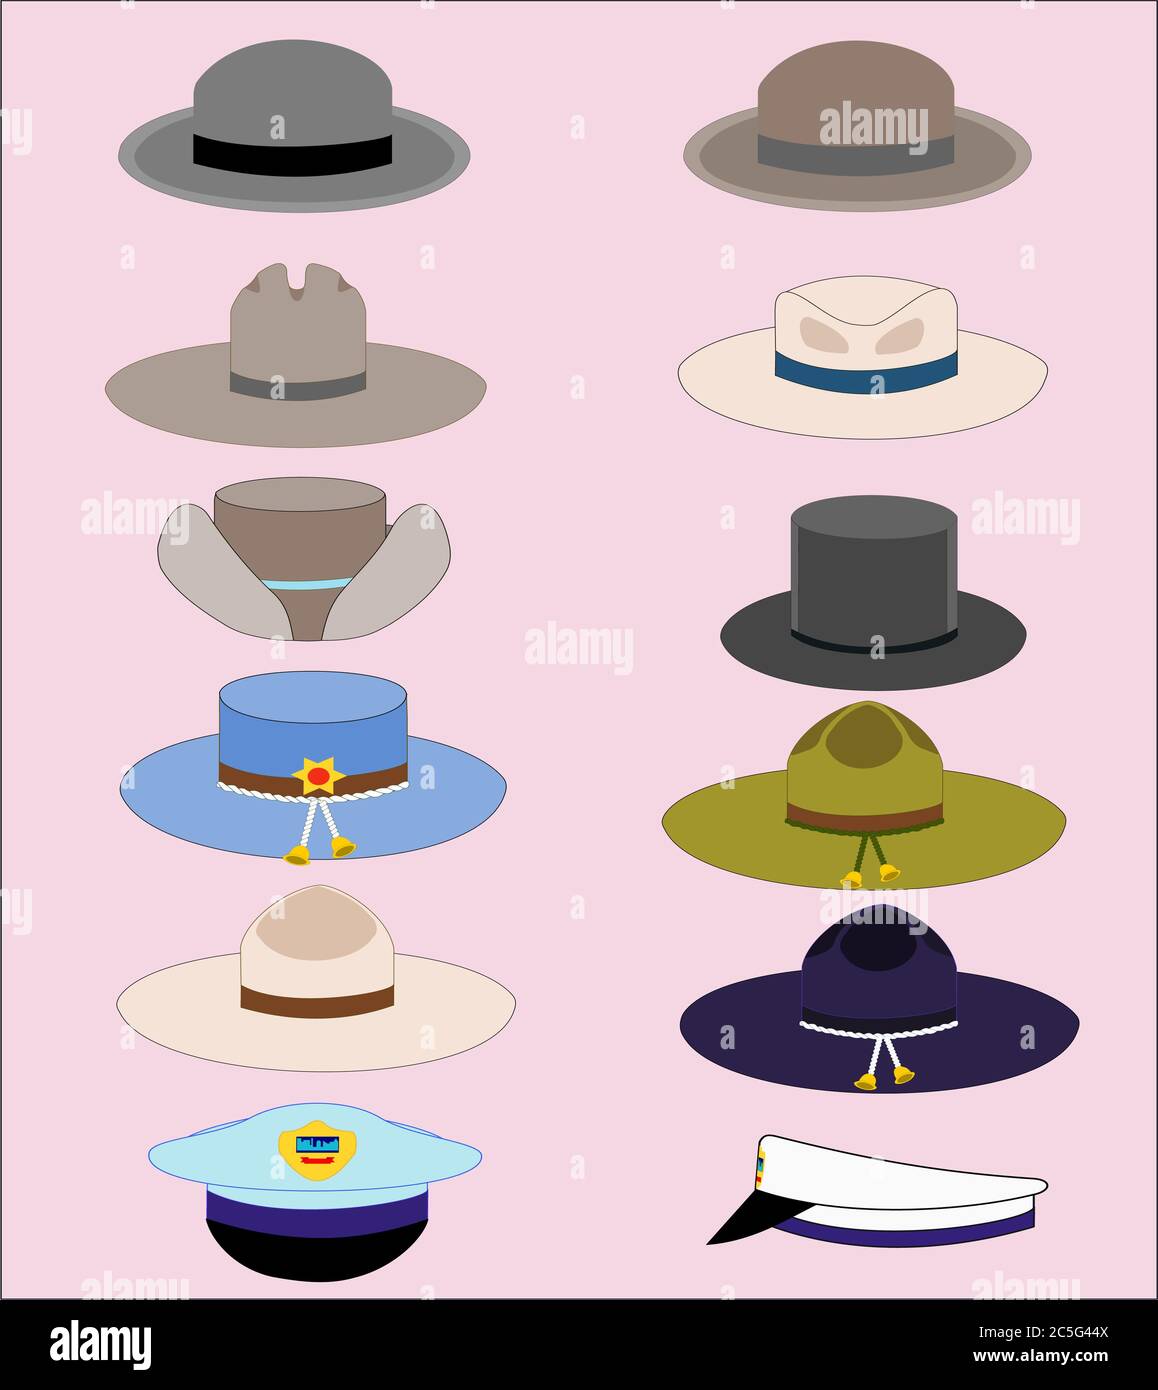 Digital illustration of twelve different hats for men, against a pink background. Stock Photo